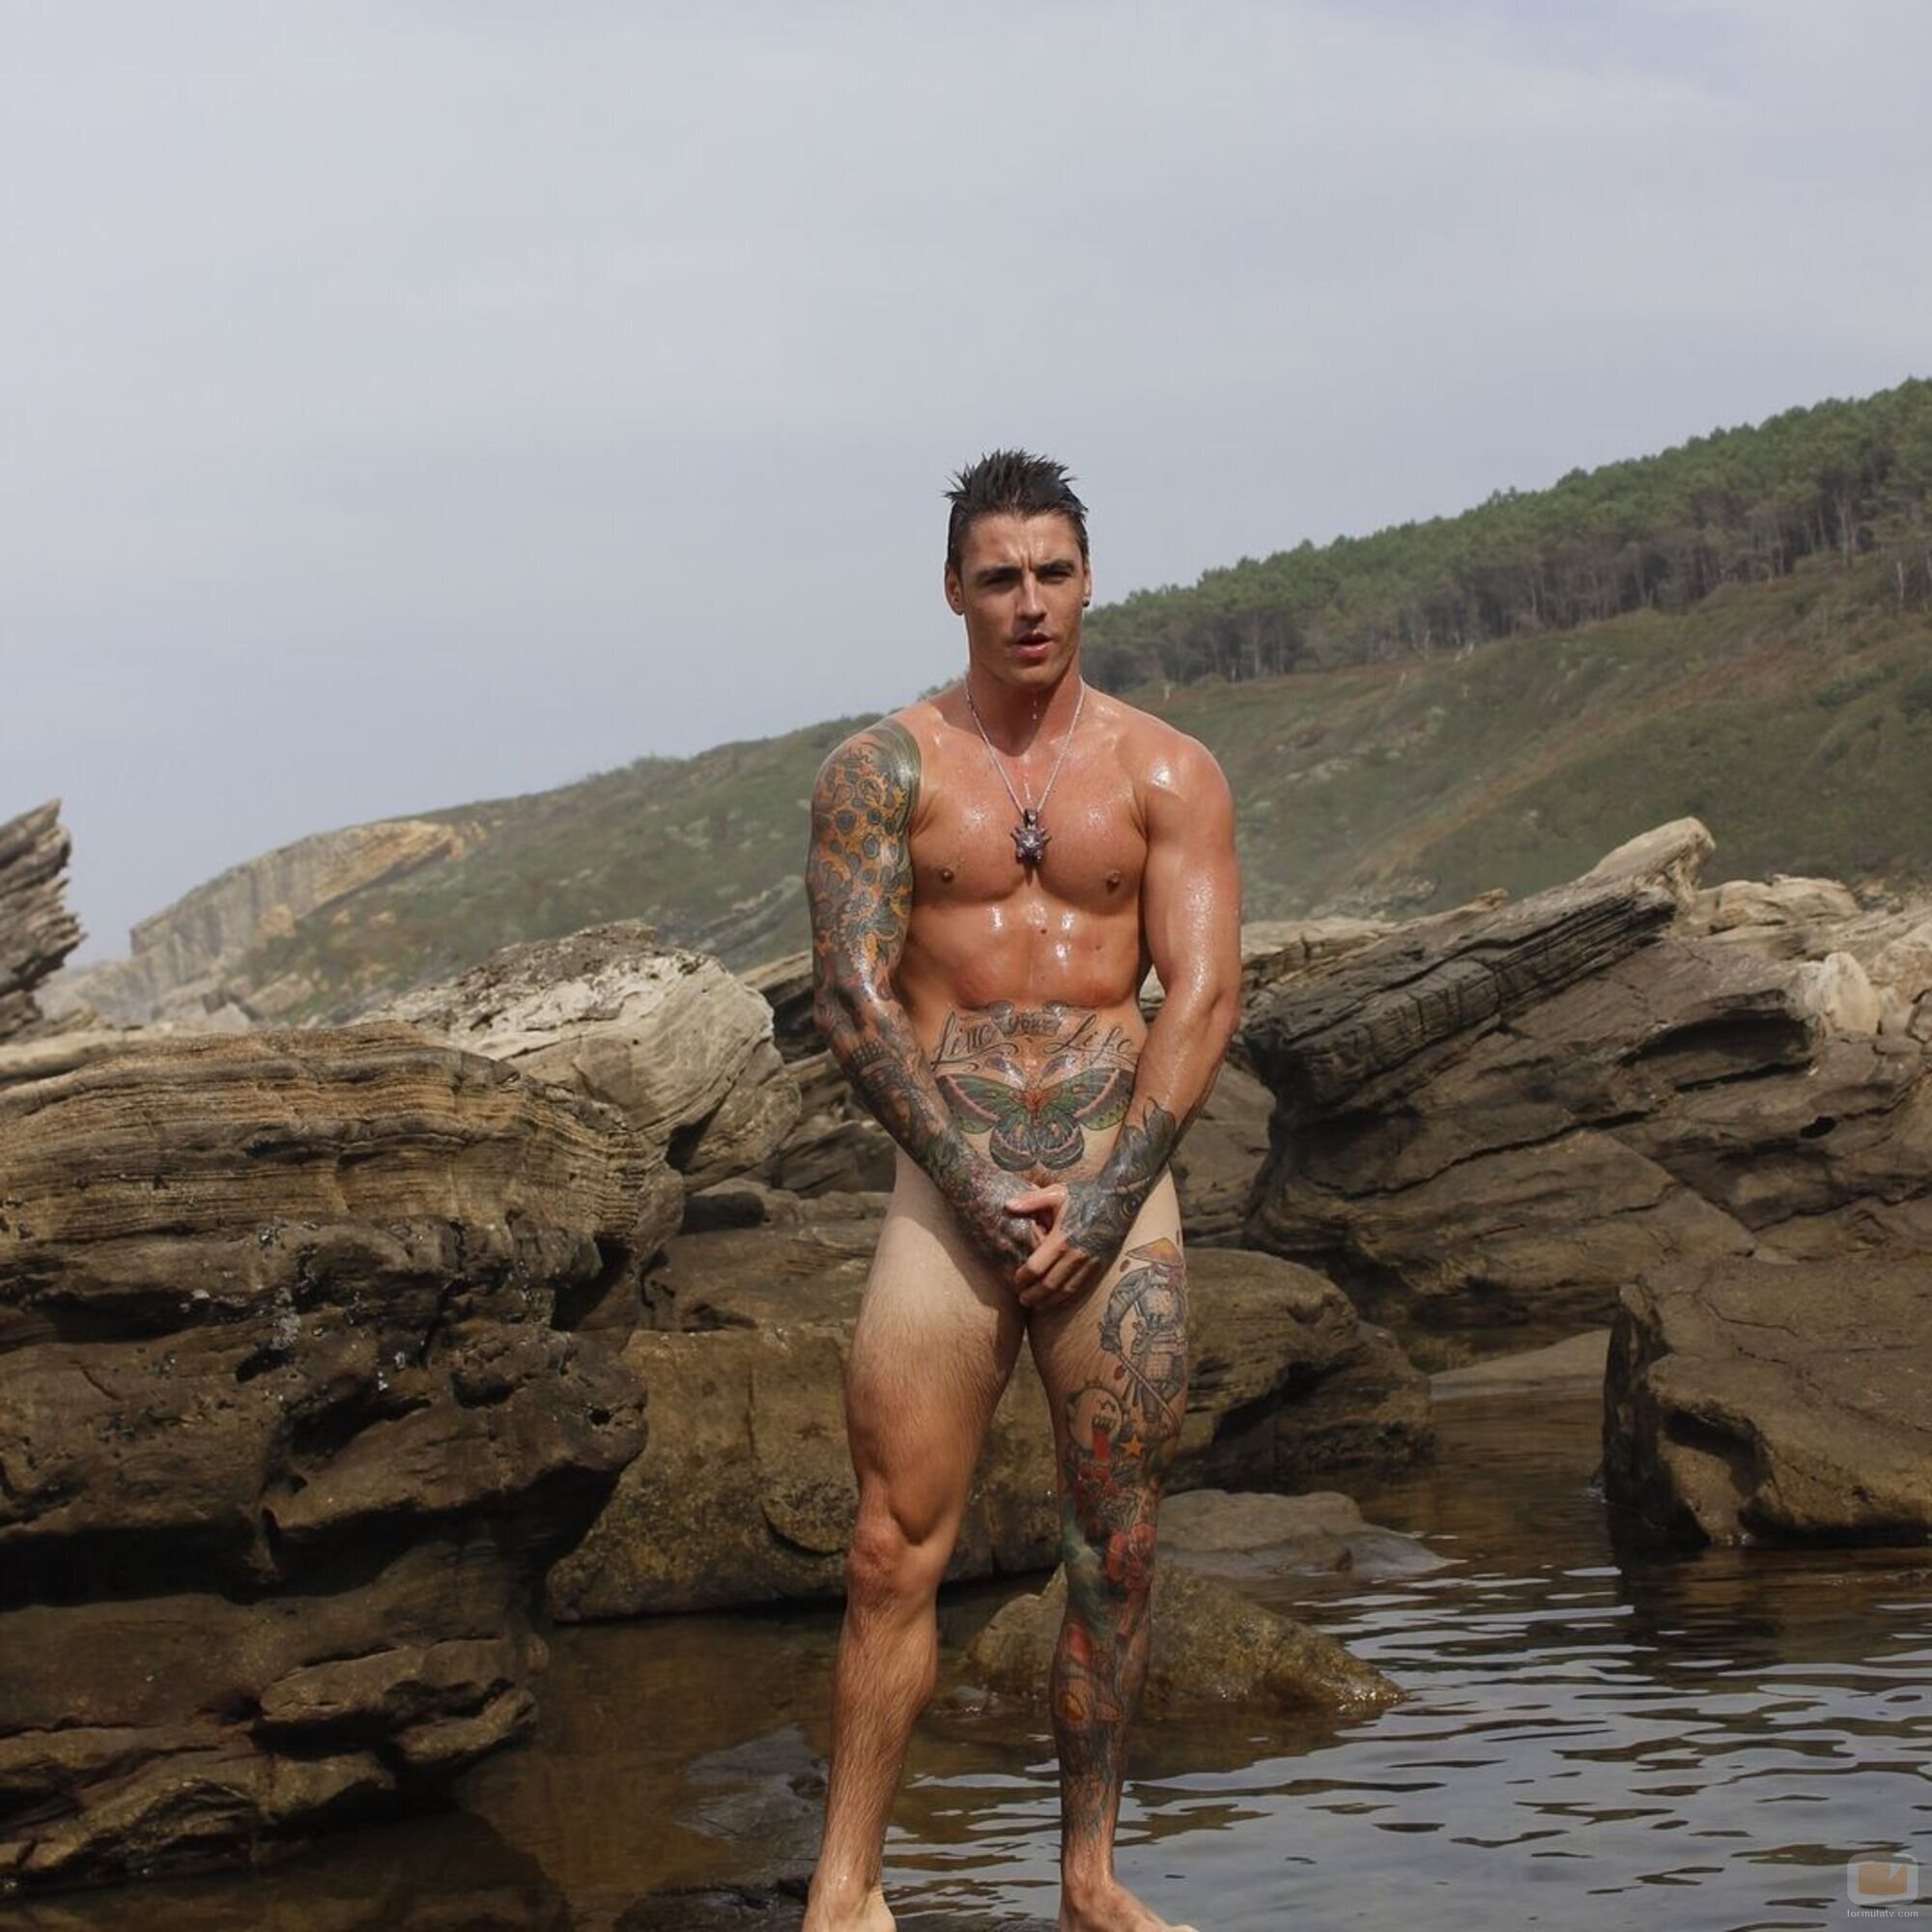 Gorka Ibarguren posa totalmente desnudo en la playa